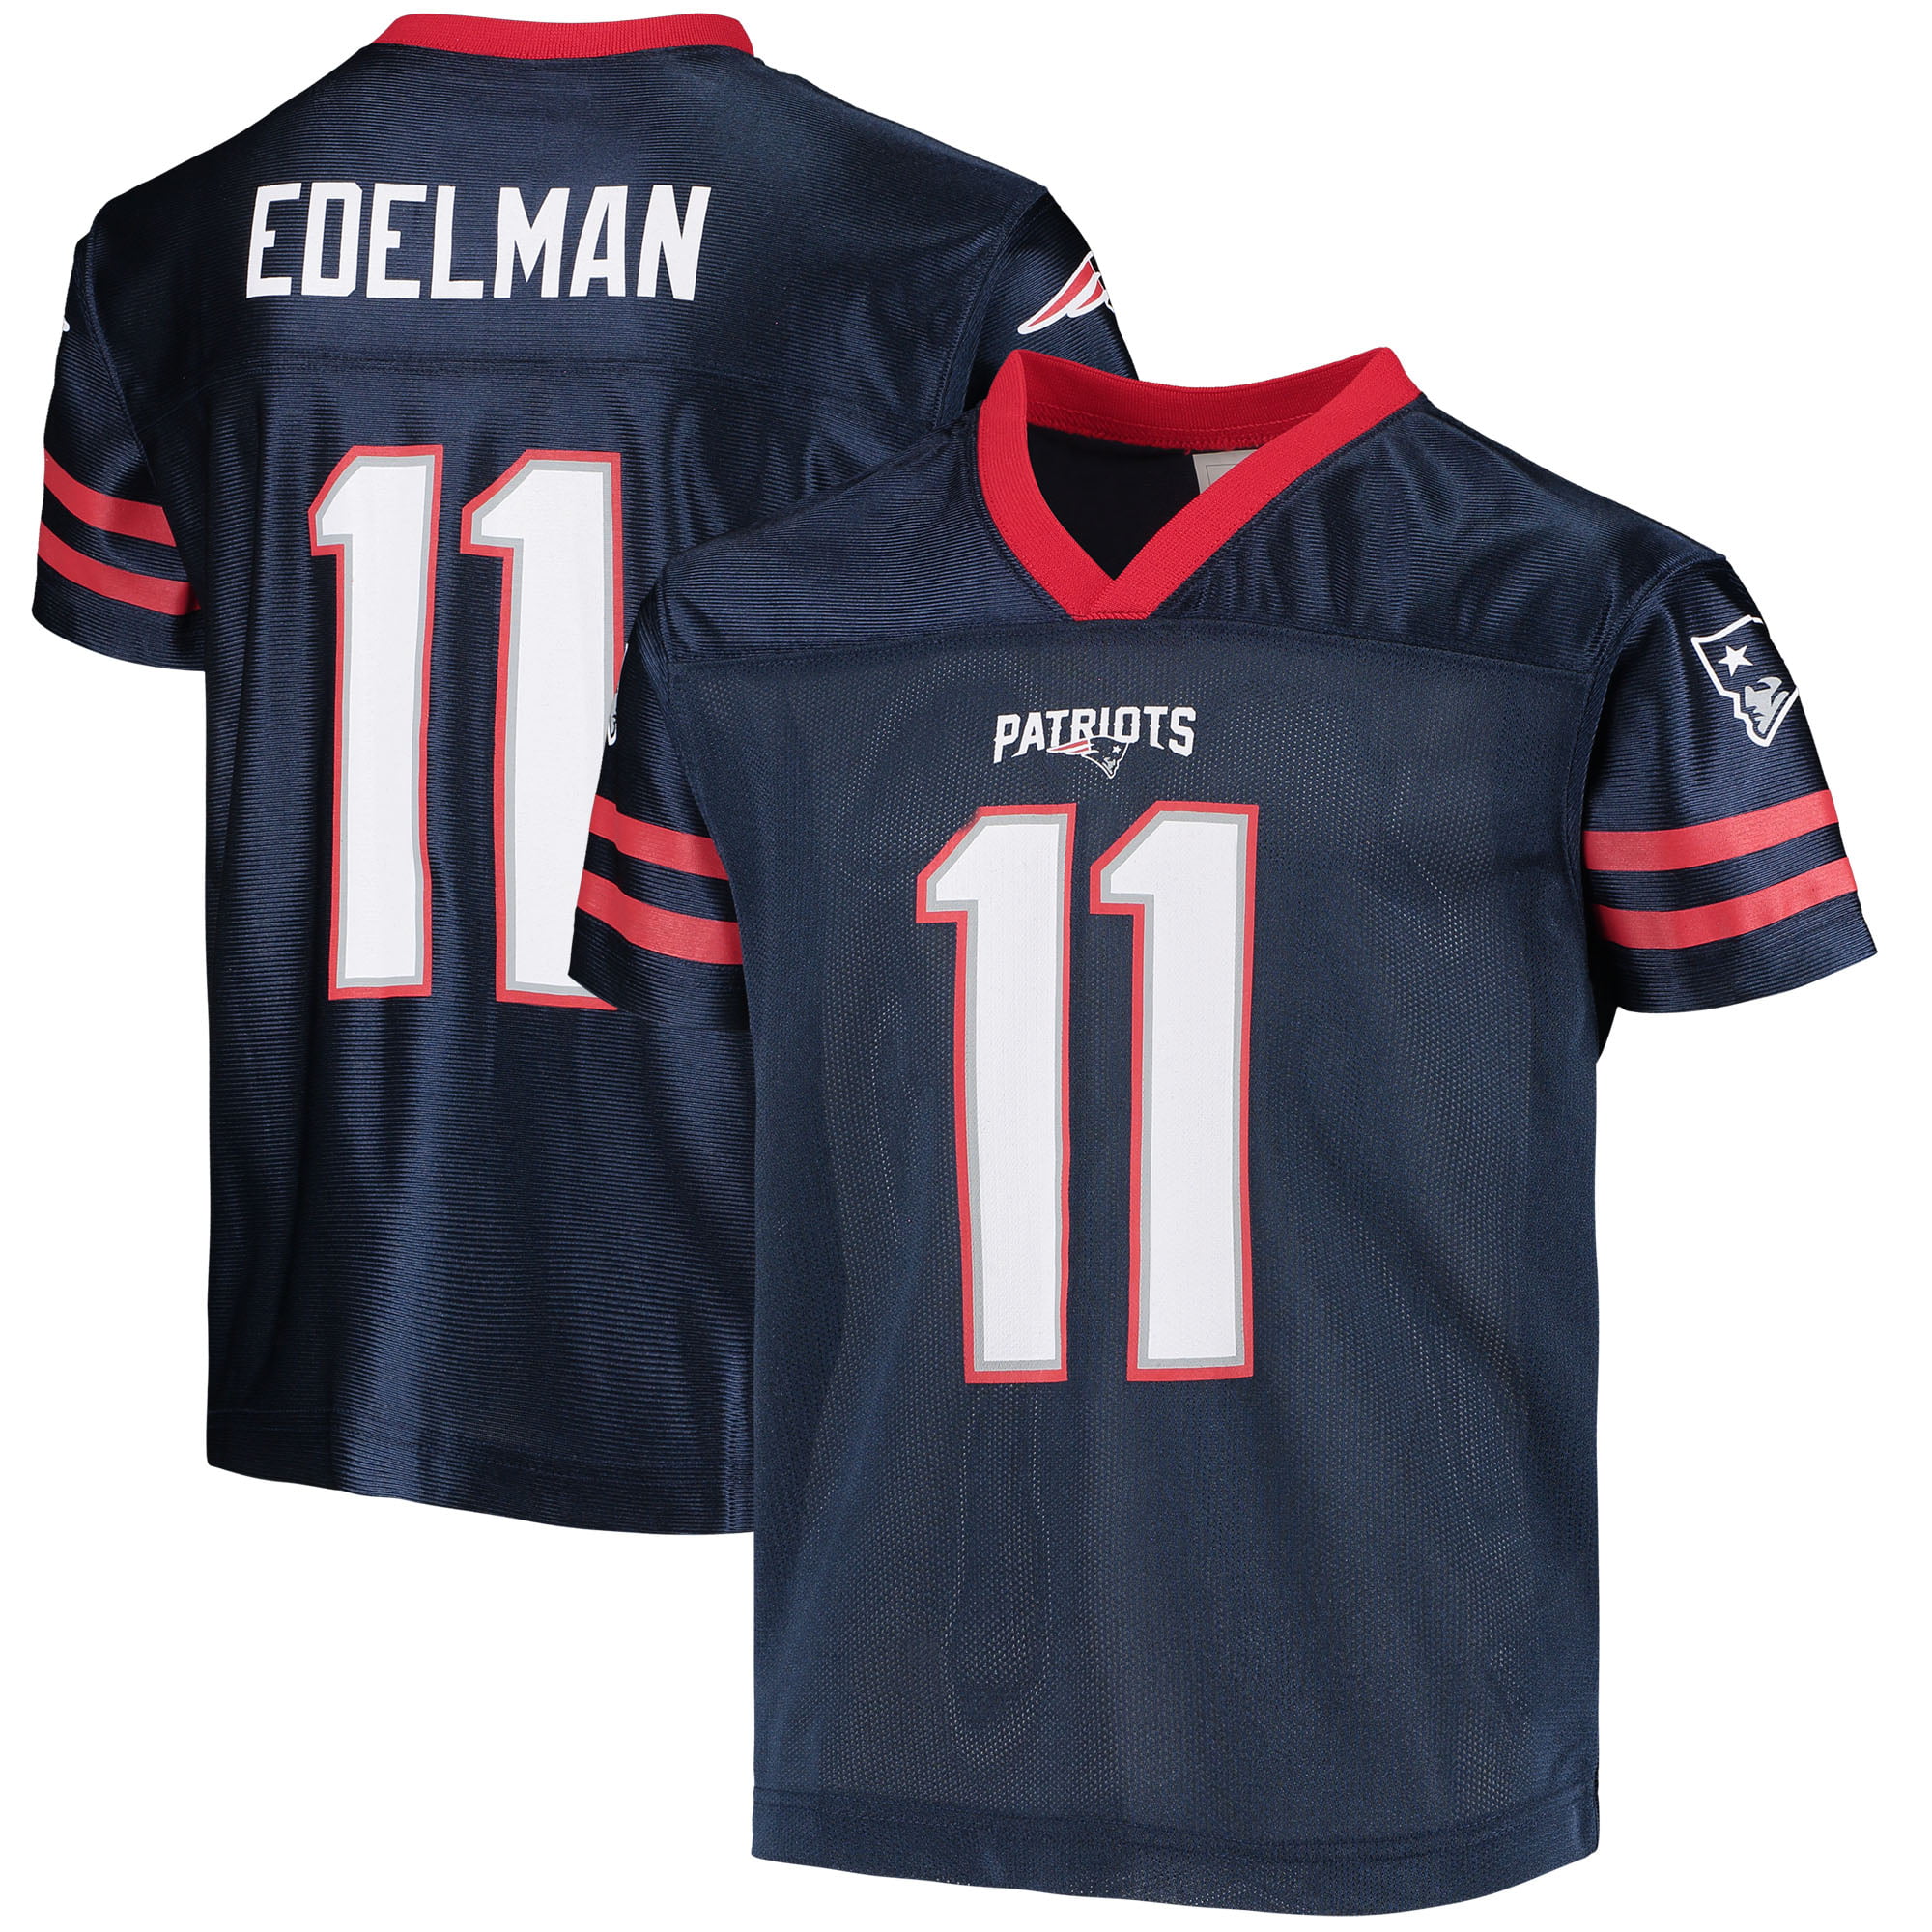 Toddler Julian Edelman Navy New England Patriots Player Jersey - Walmart.com